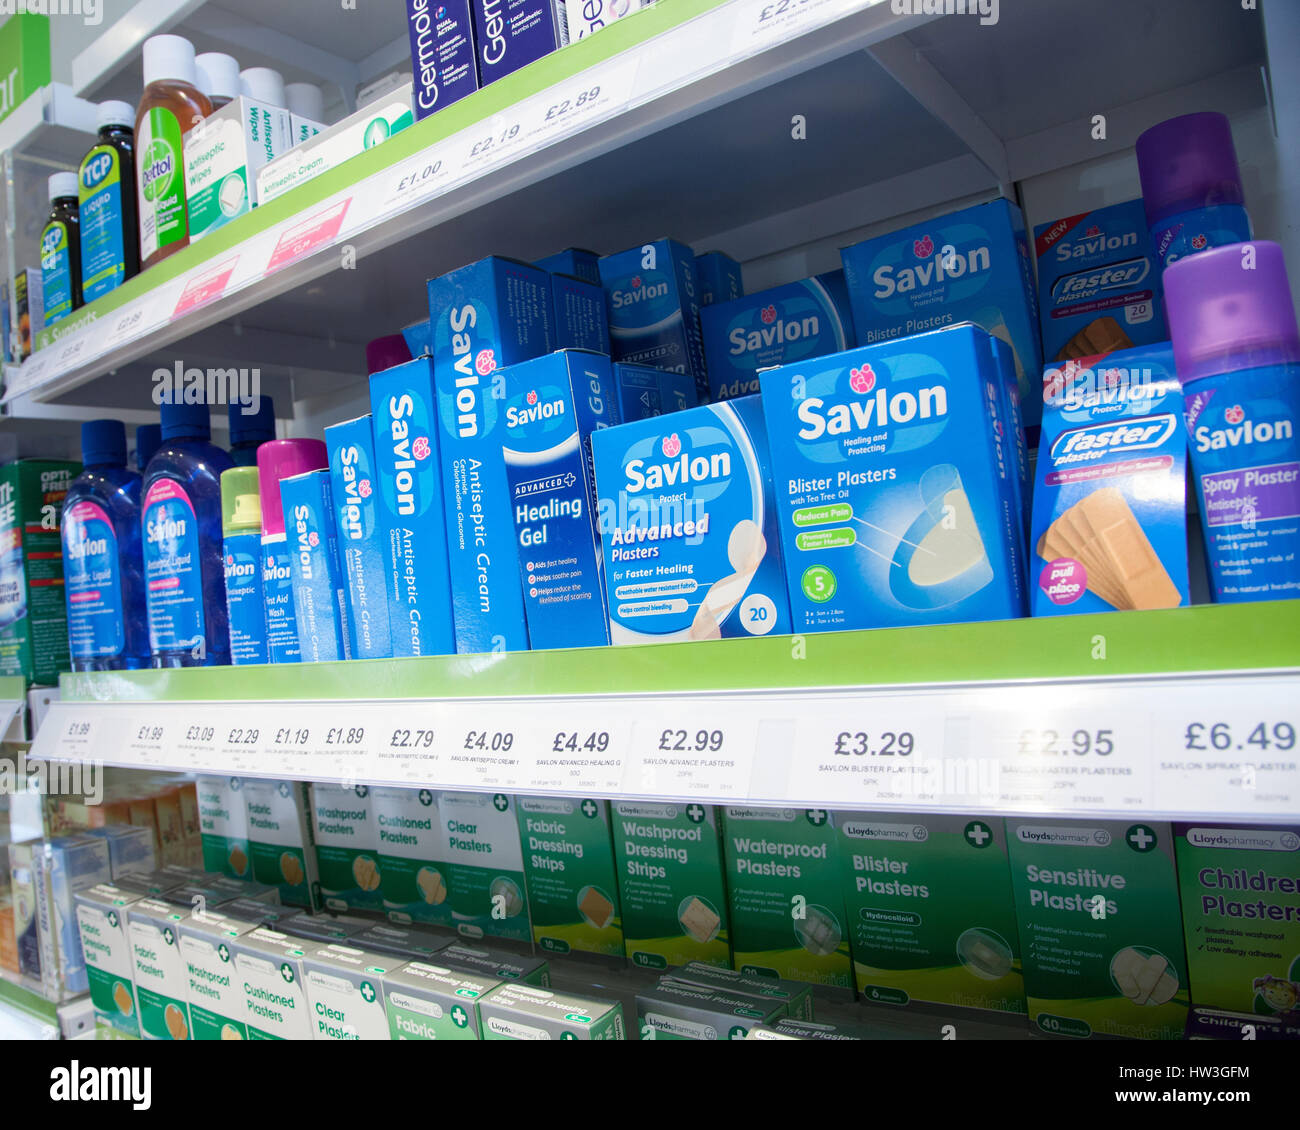 Plasters and antiseptic cream Savlon and Germolene on the shelves of a pharmacy shop. Stock Photo